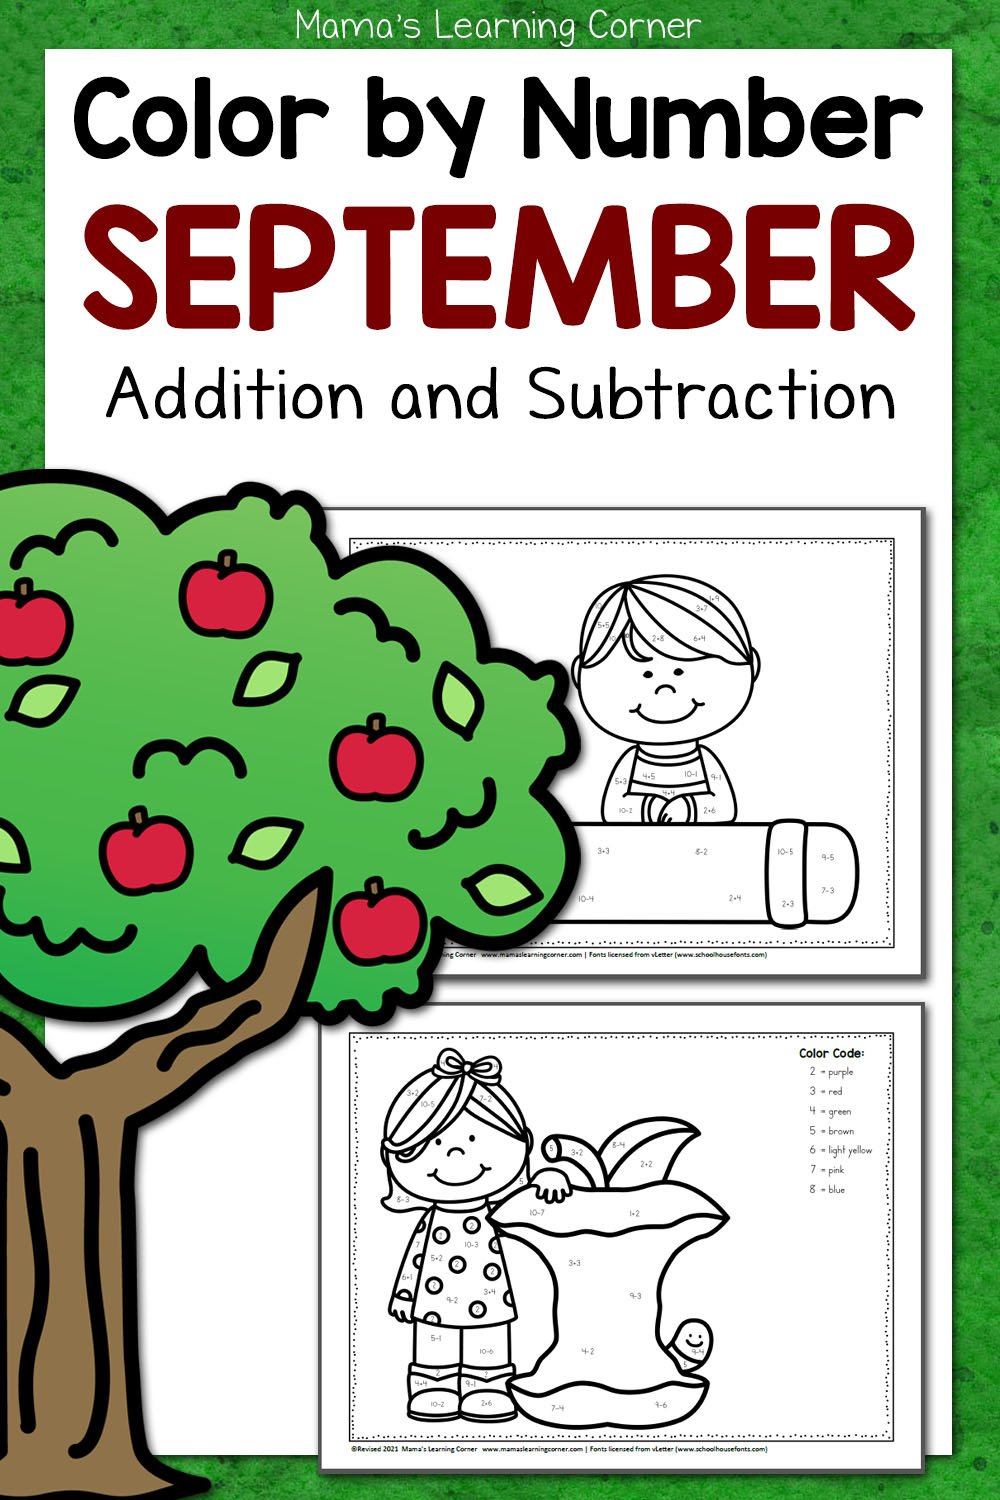 september-color-by-number-worksheets-mamas-learning-corner